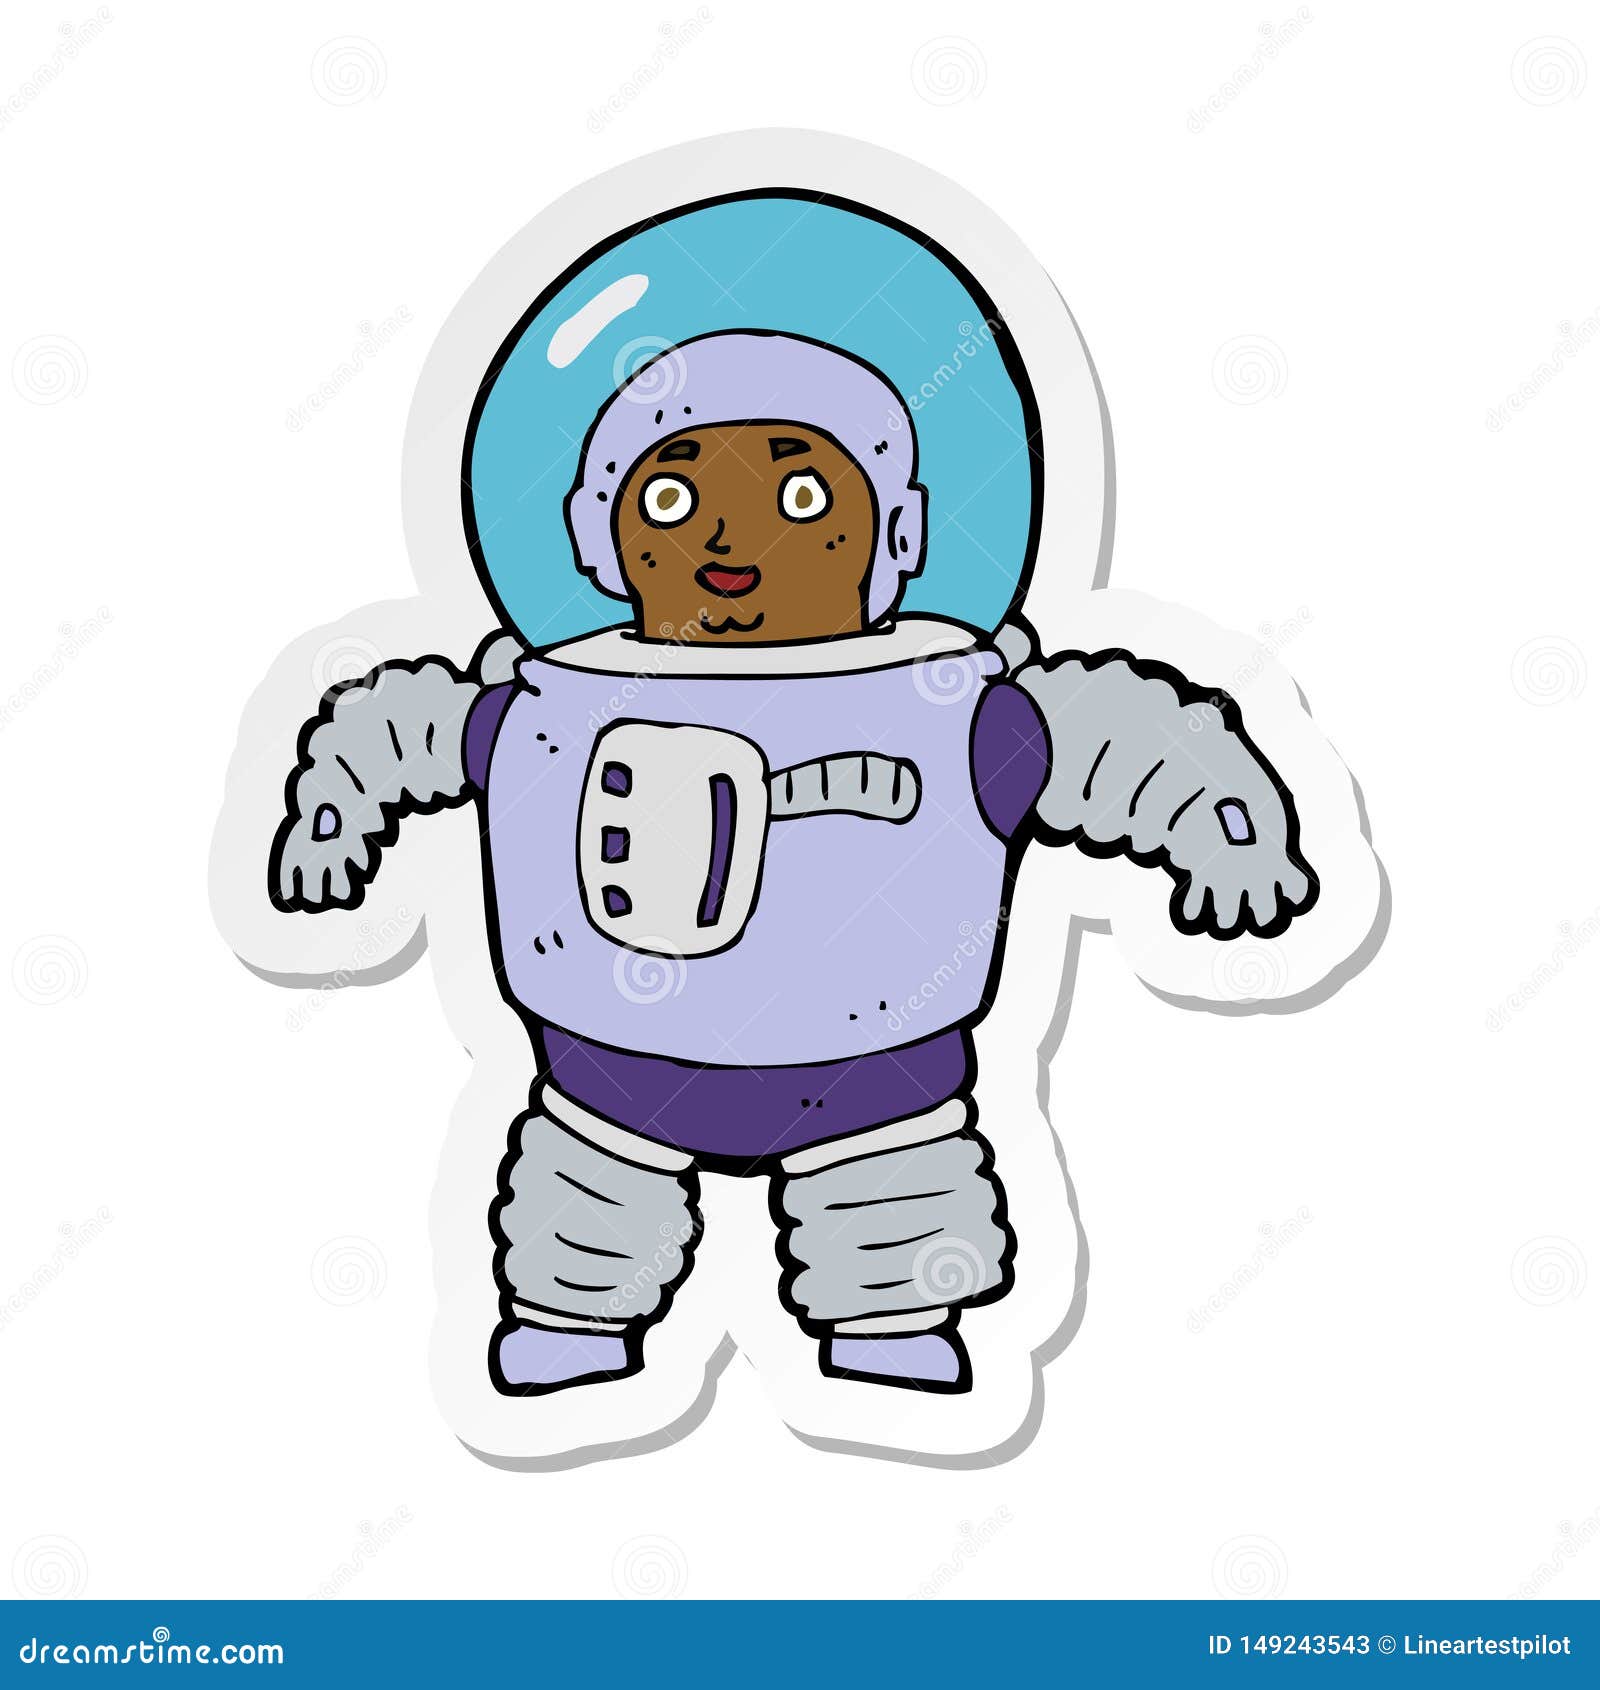 Sticker Man Male Space Astronaut Spaceman Spacesuit Suit Cartoon